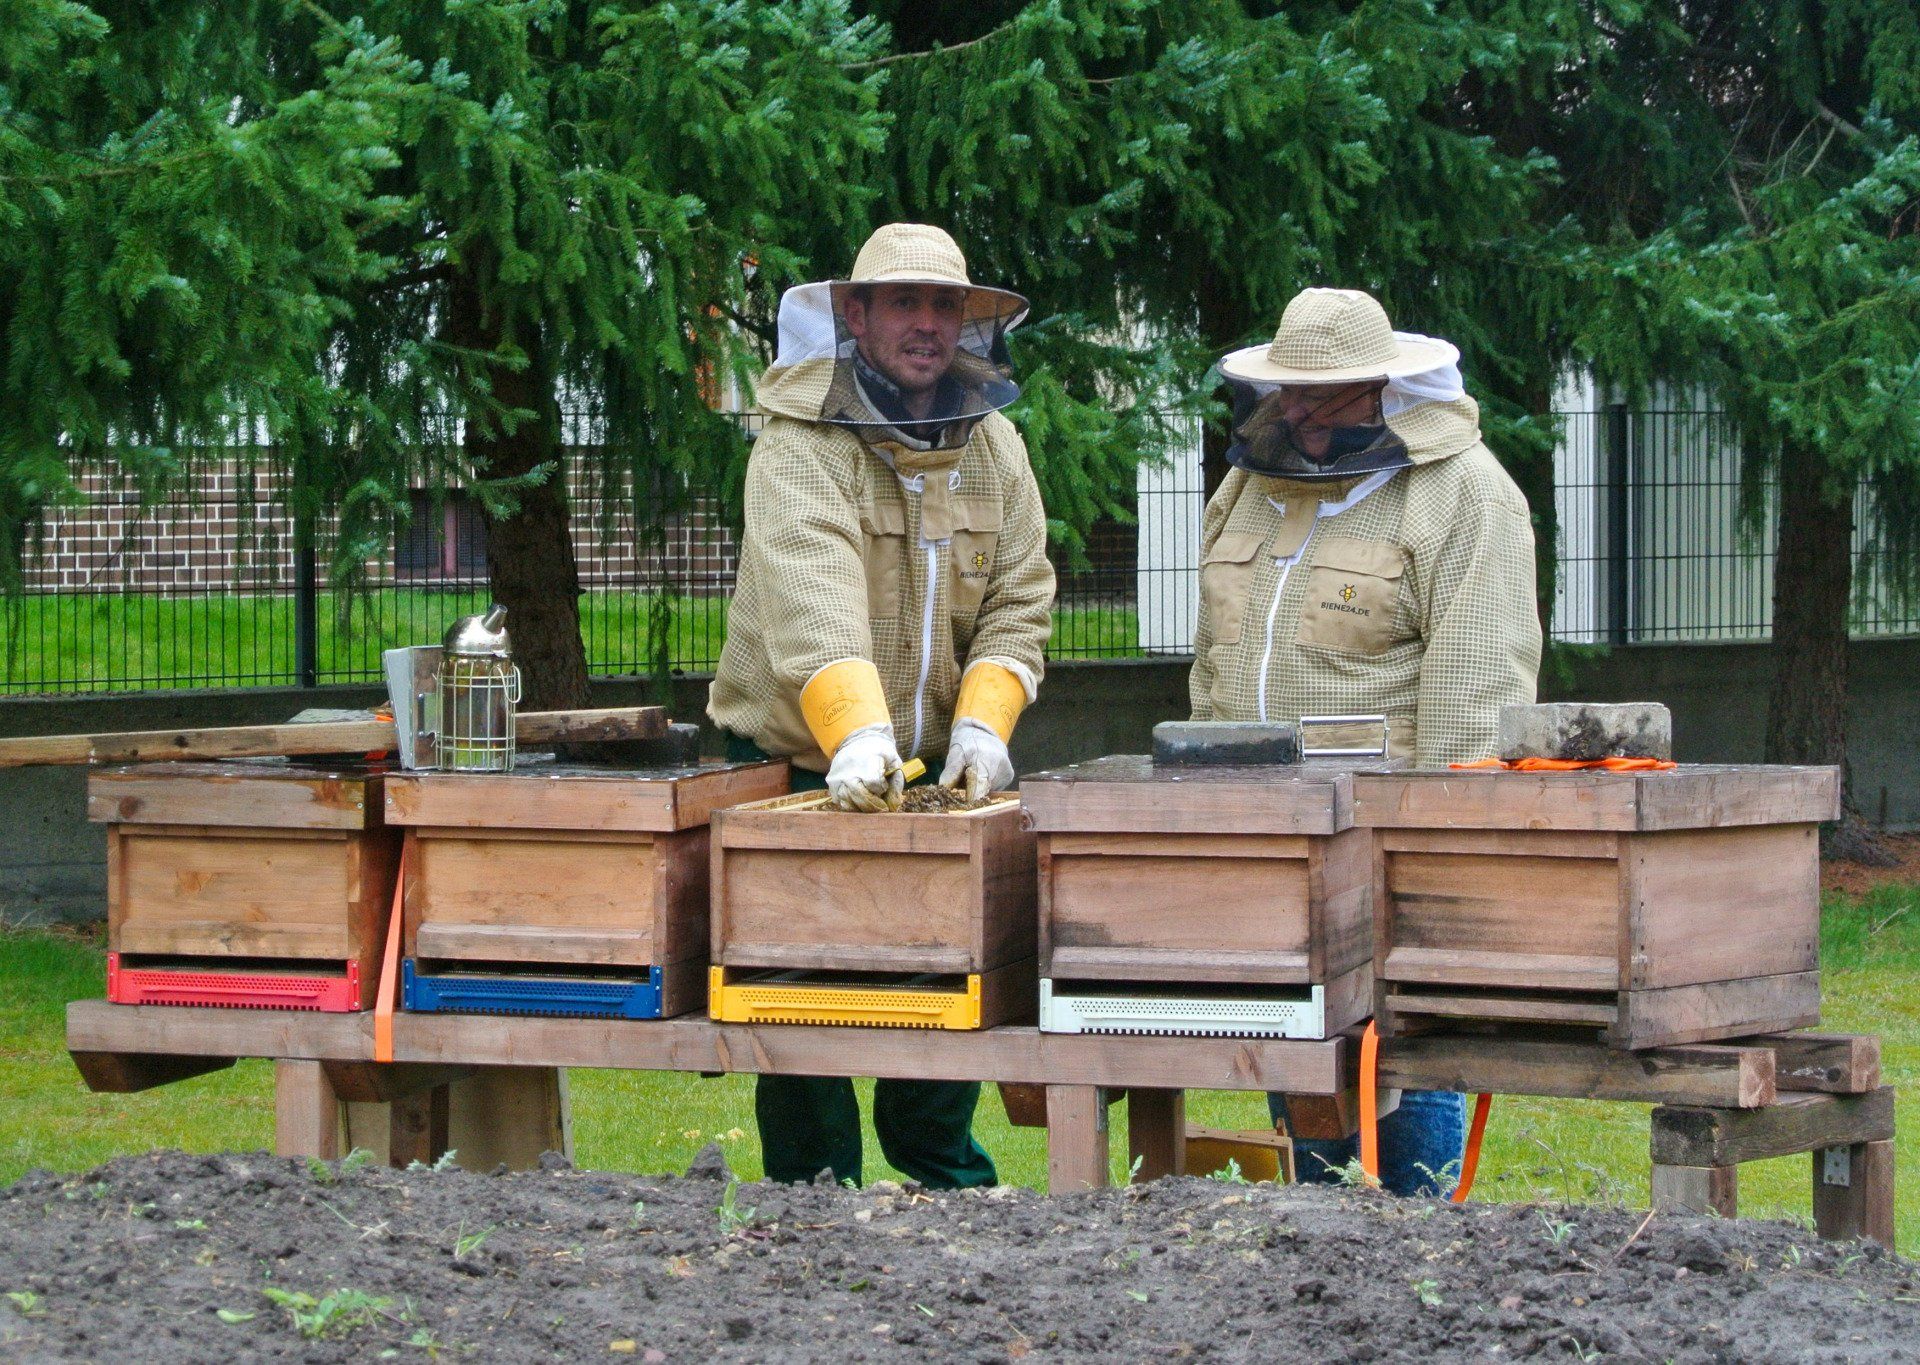 Imker arbeiten am Bienenvolk